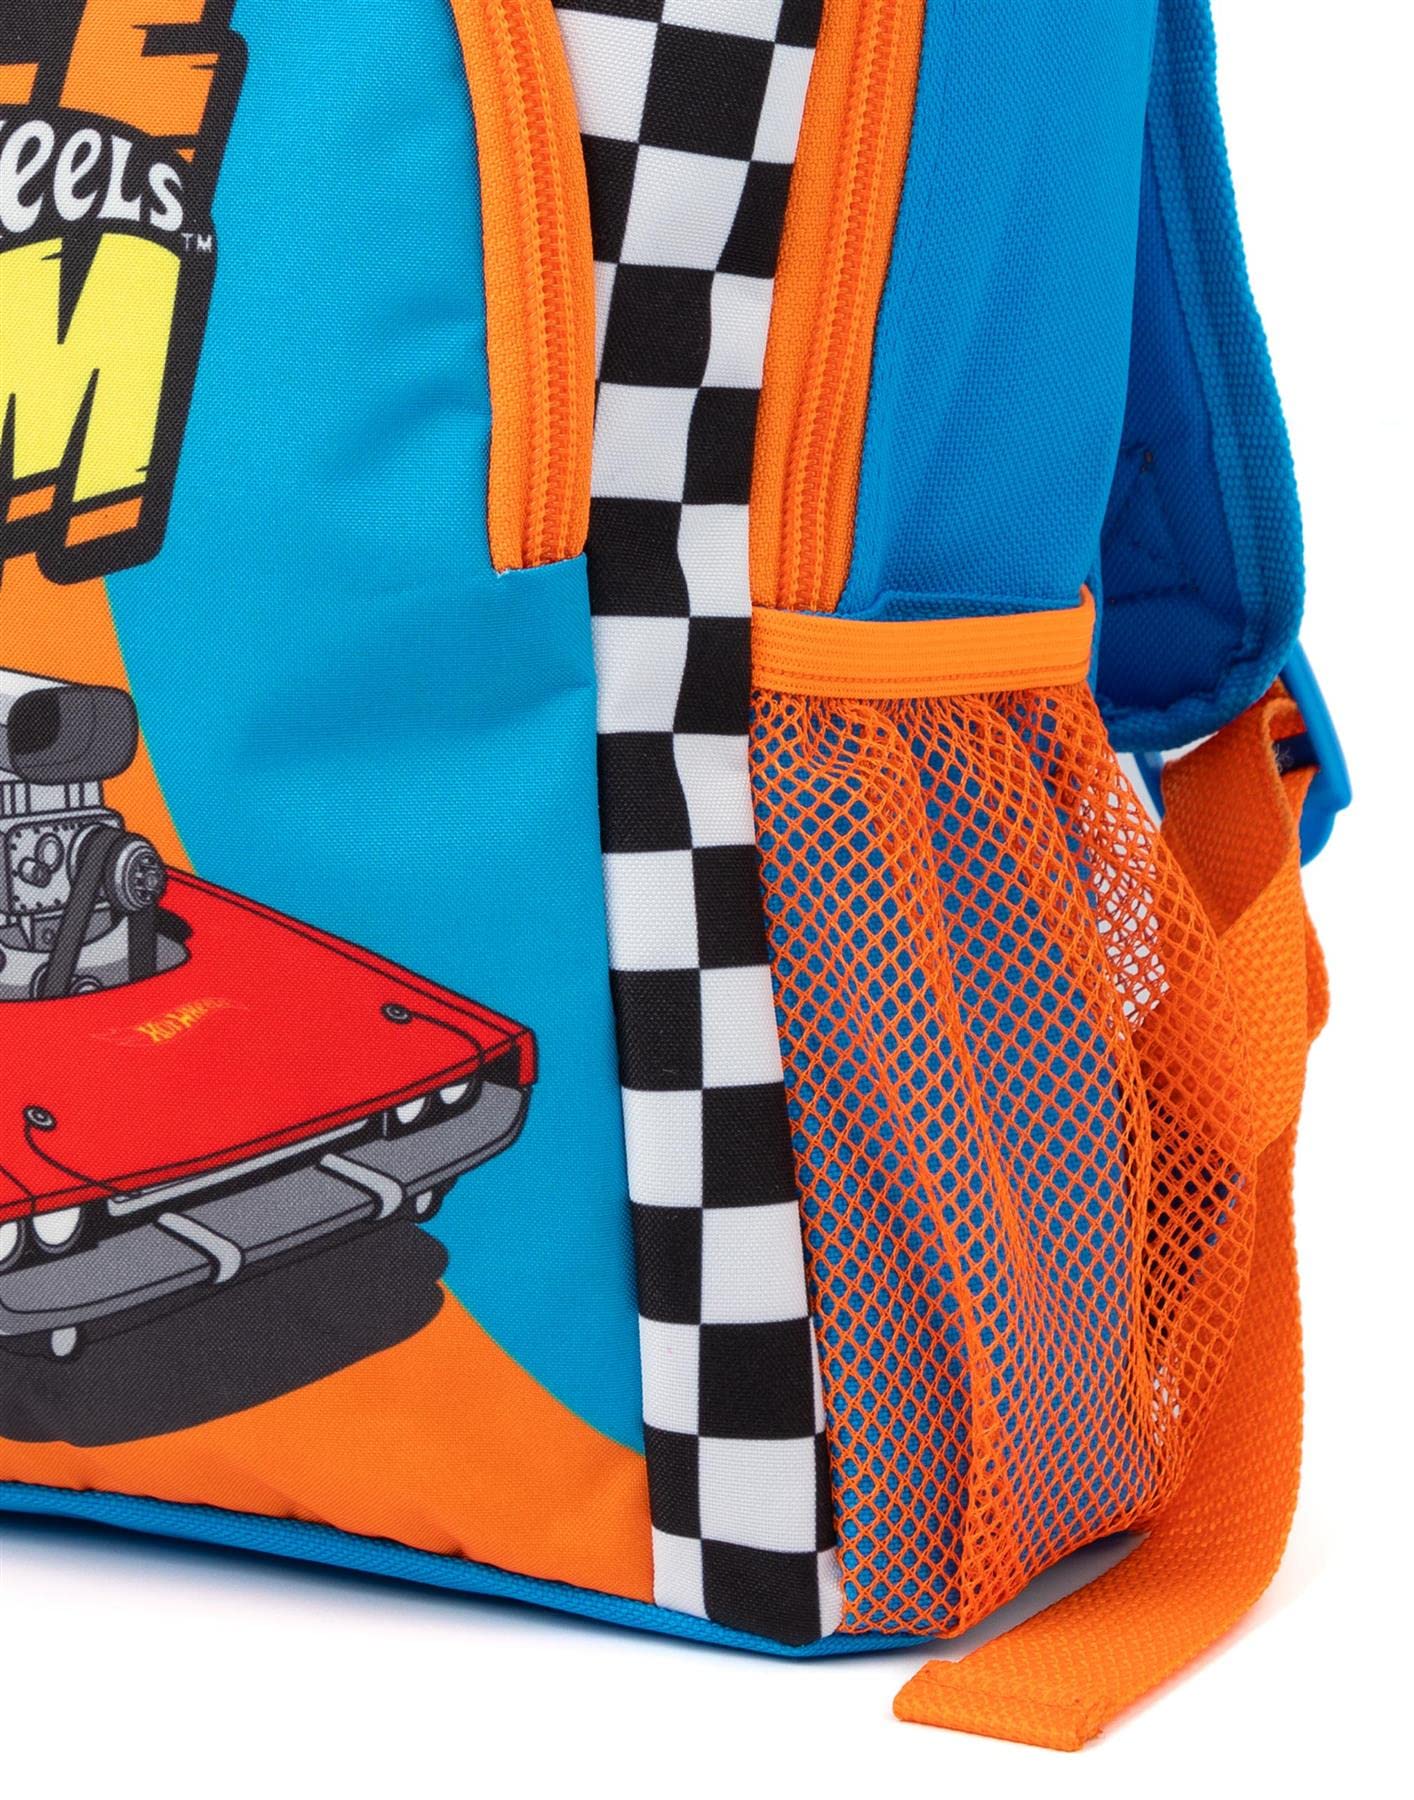 Hot Wheels Kids Backpack | Girls Boys Orange Blue Car Race Wheels Rucksack | Luggage Sports School Bag with Adjustable Straps | Racer Merchandise Gifts